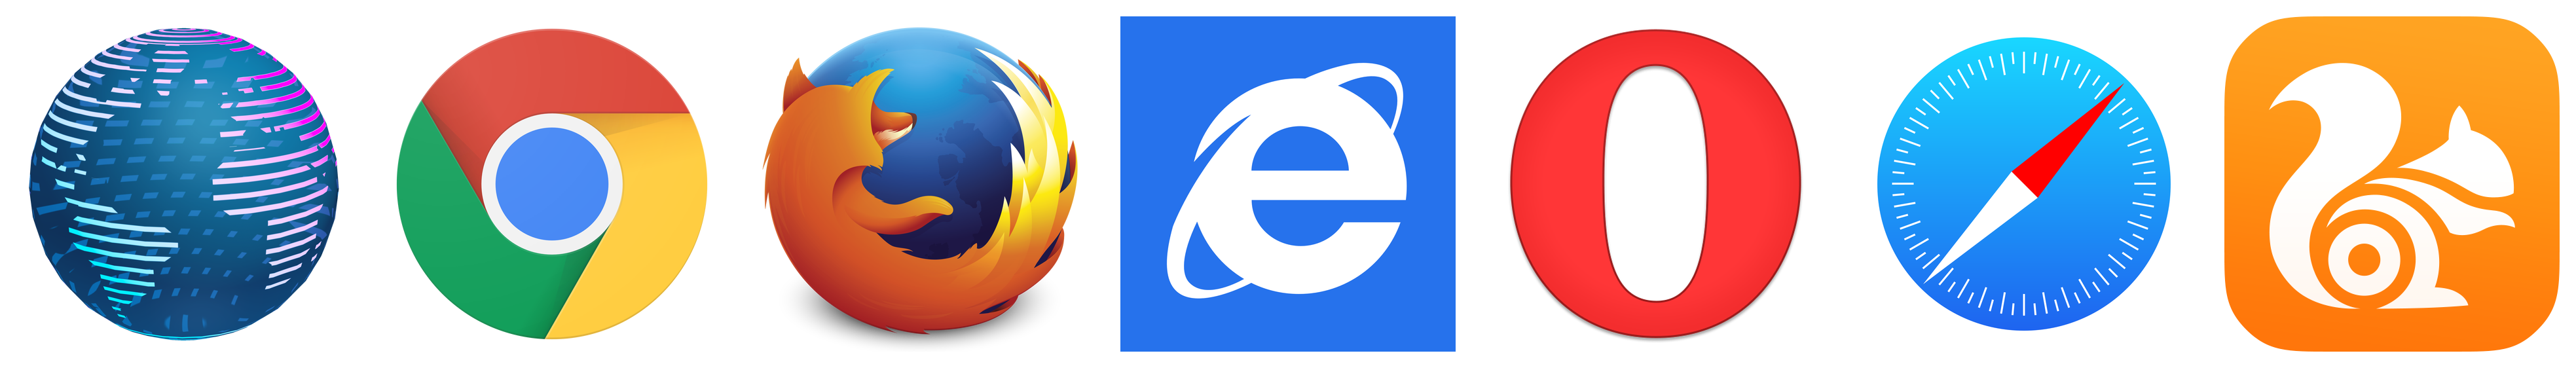 Main mobile browsers logos